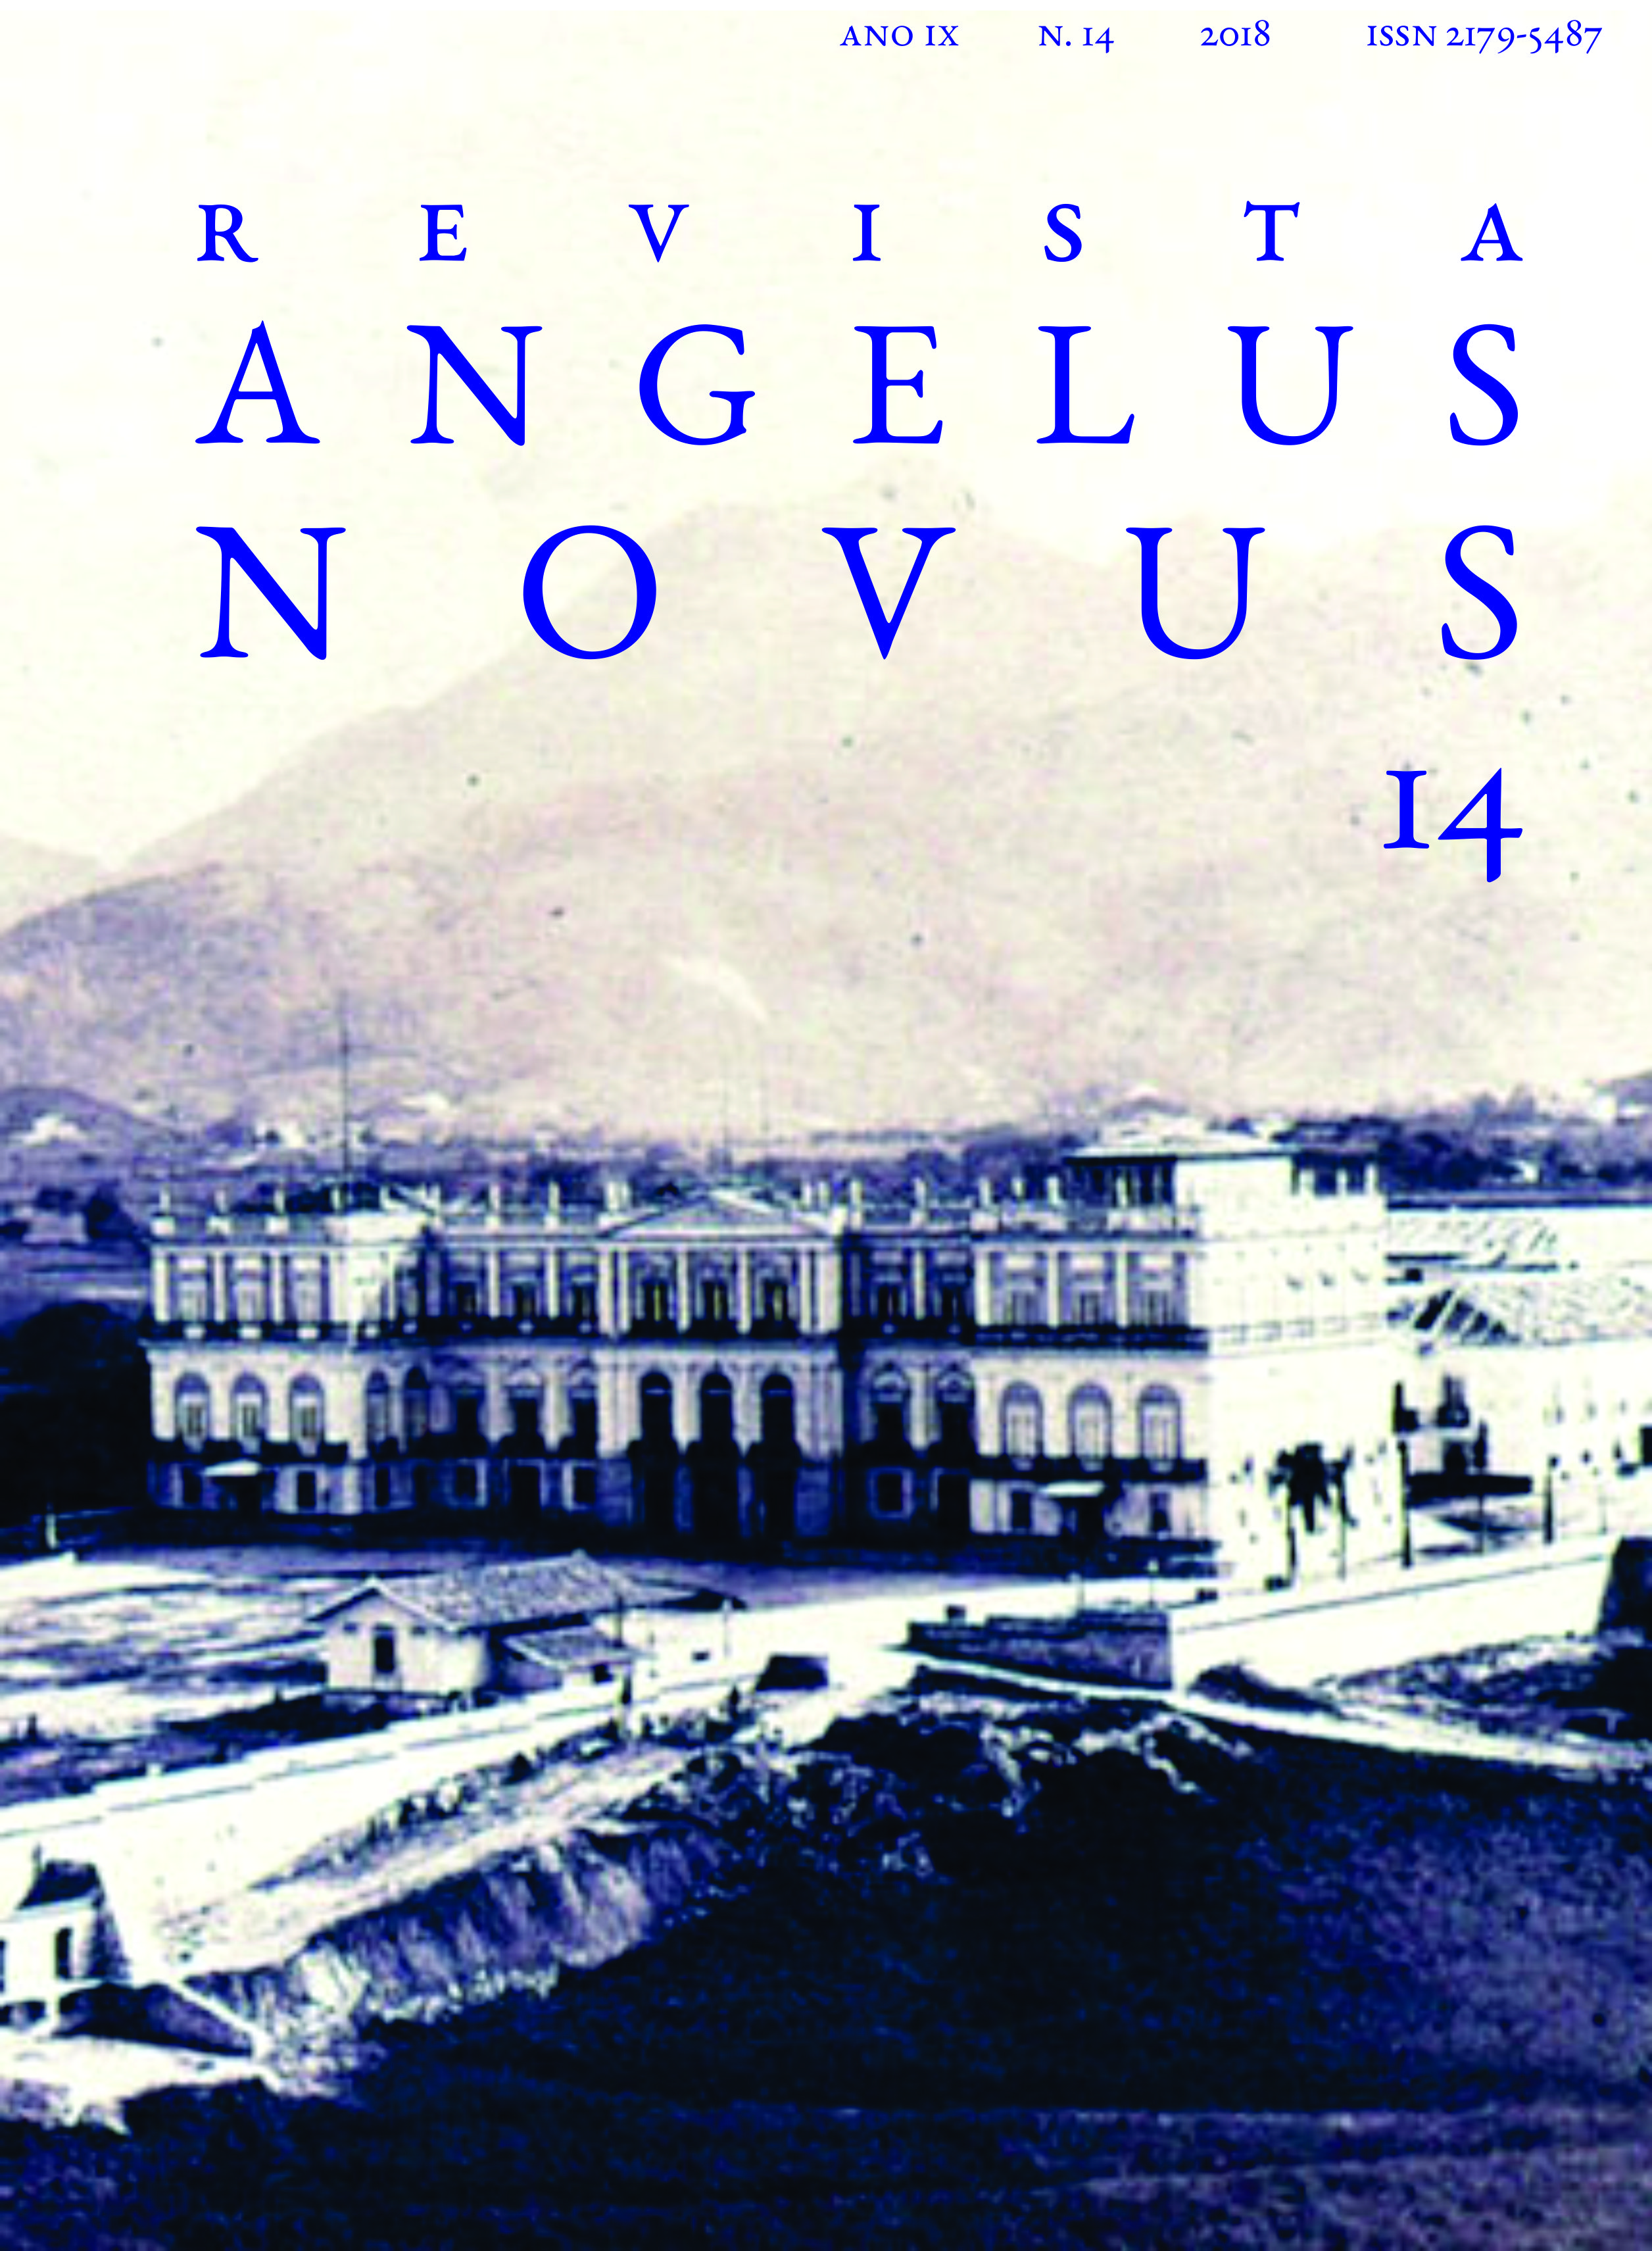 					Ver Núm. 14 (2018): Revista Angelus Novus
				